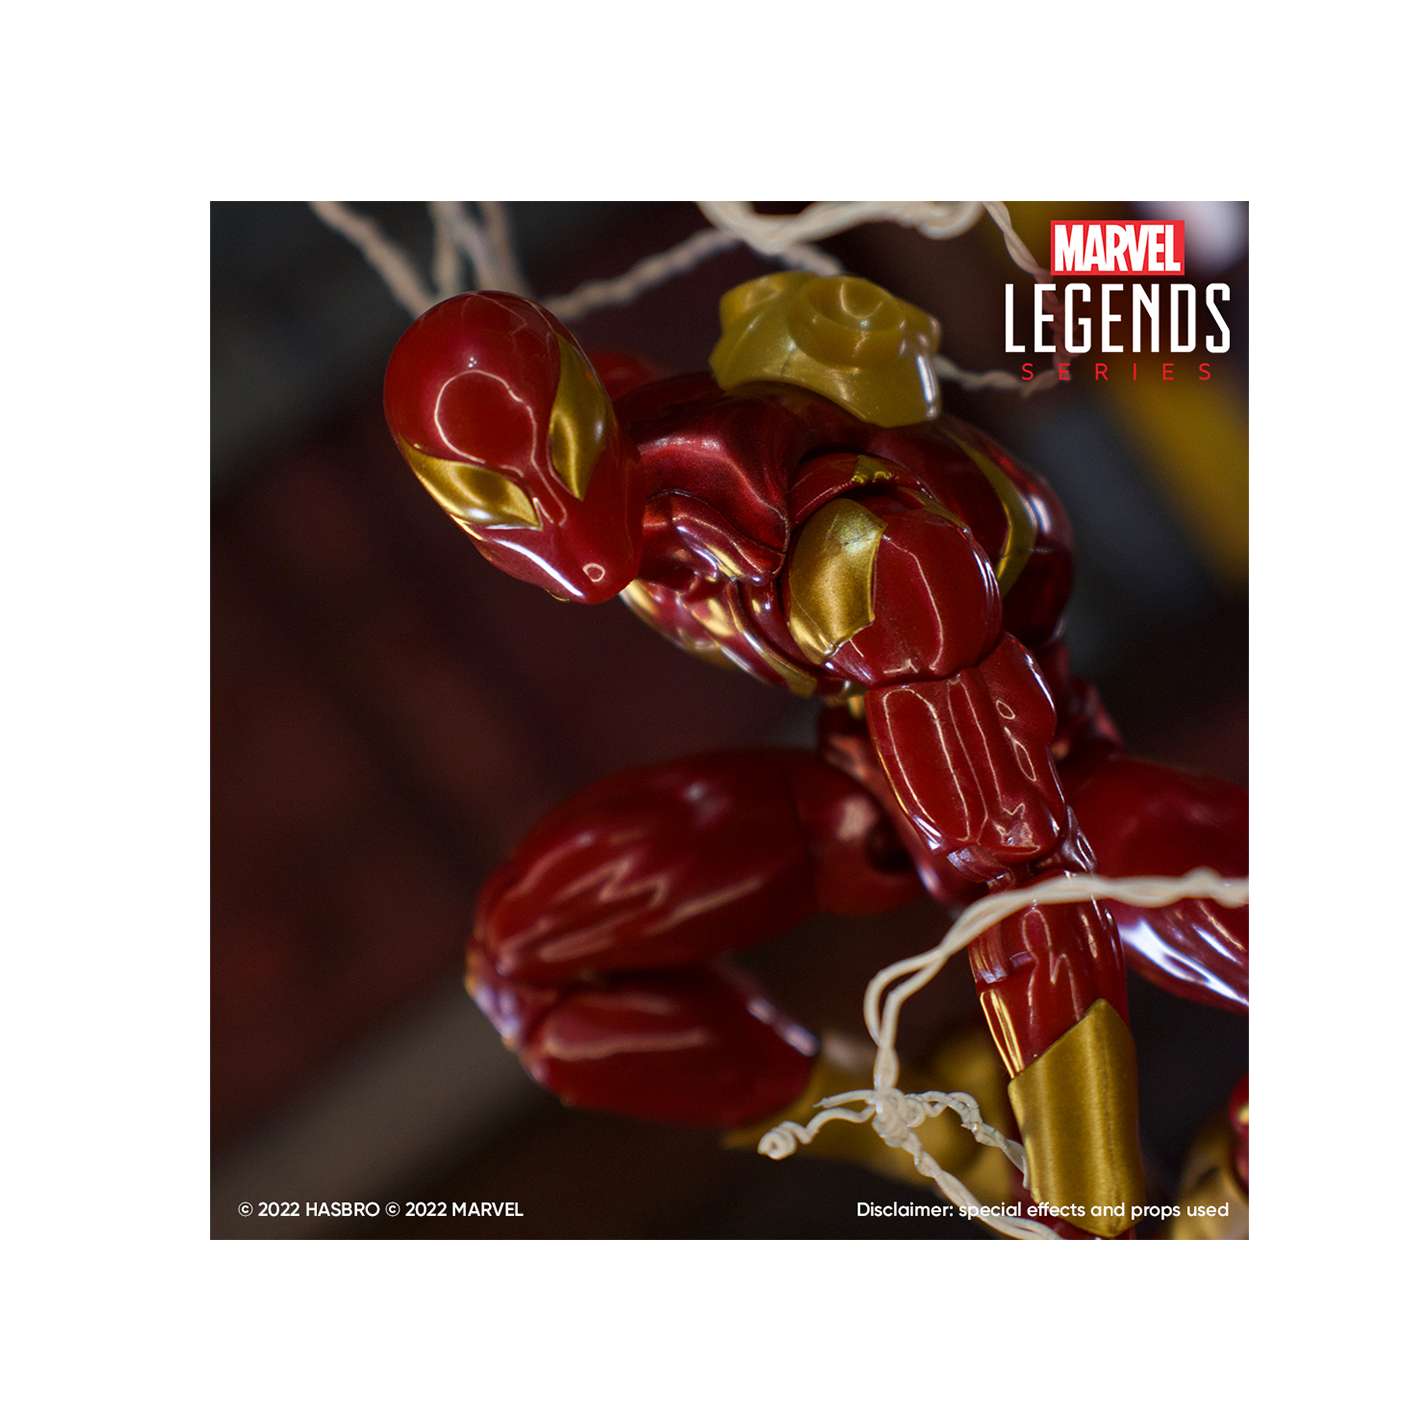 Marvel Legends 20th Anniversary: Iron Spider